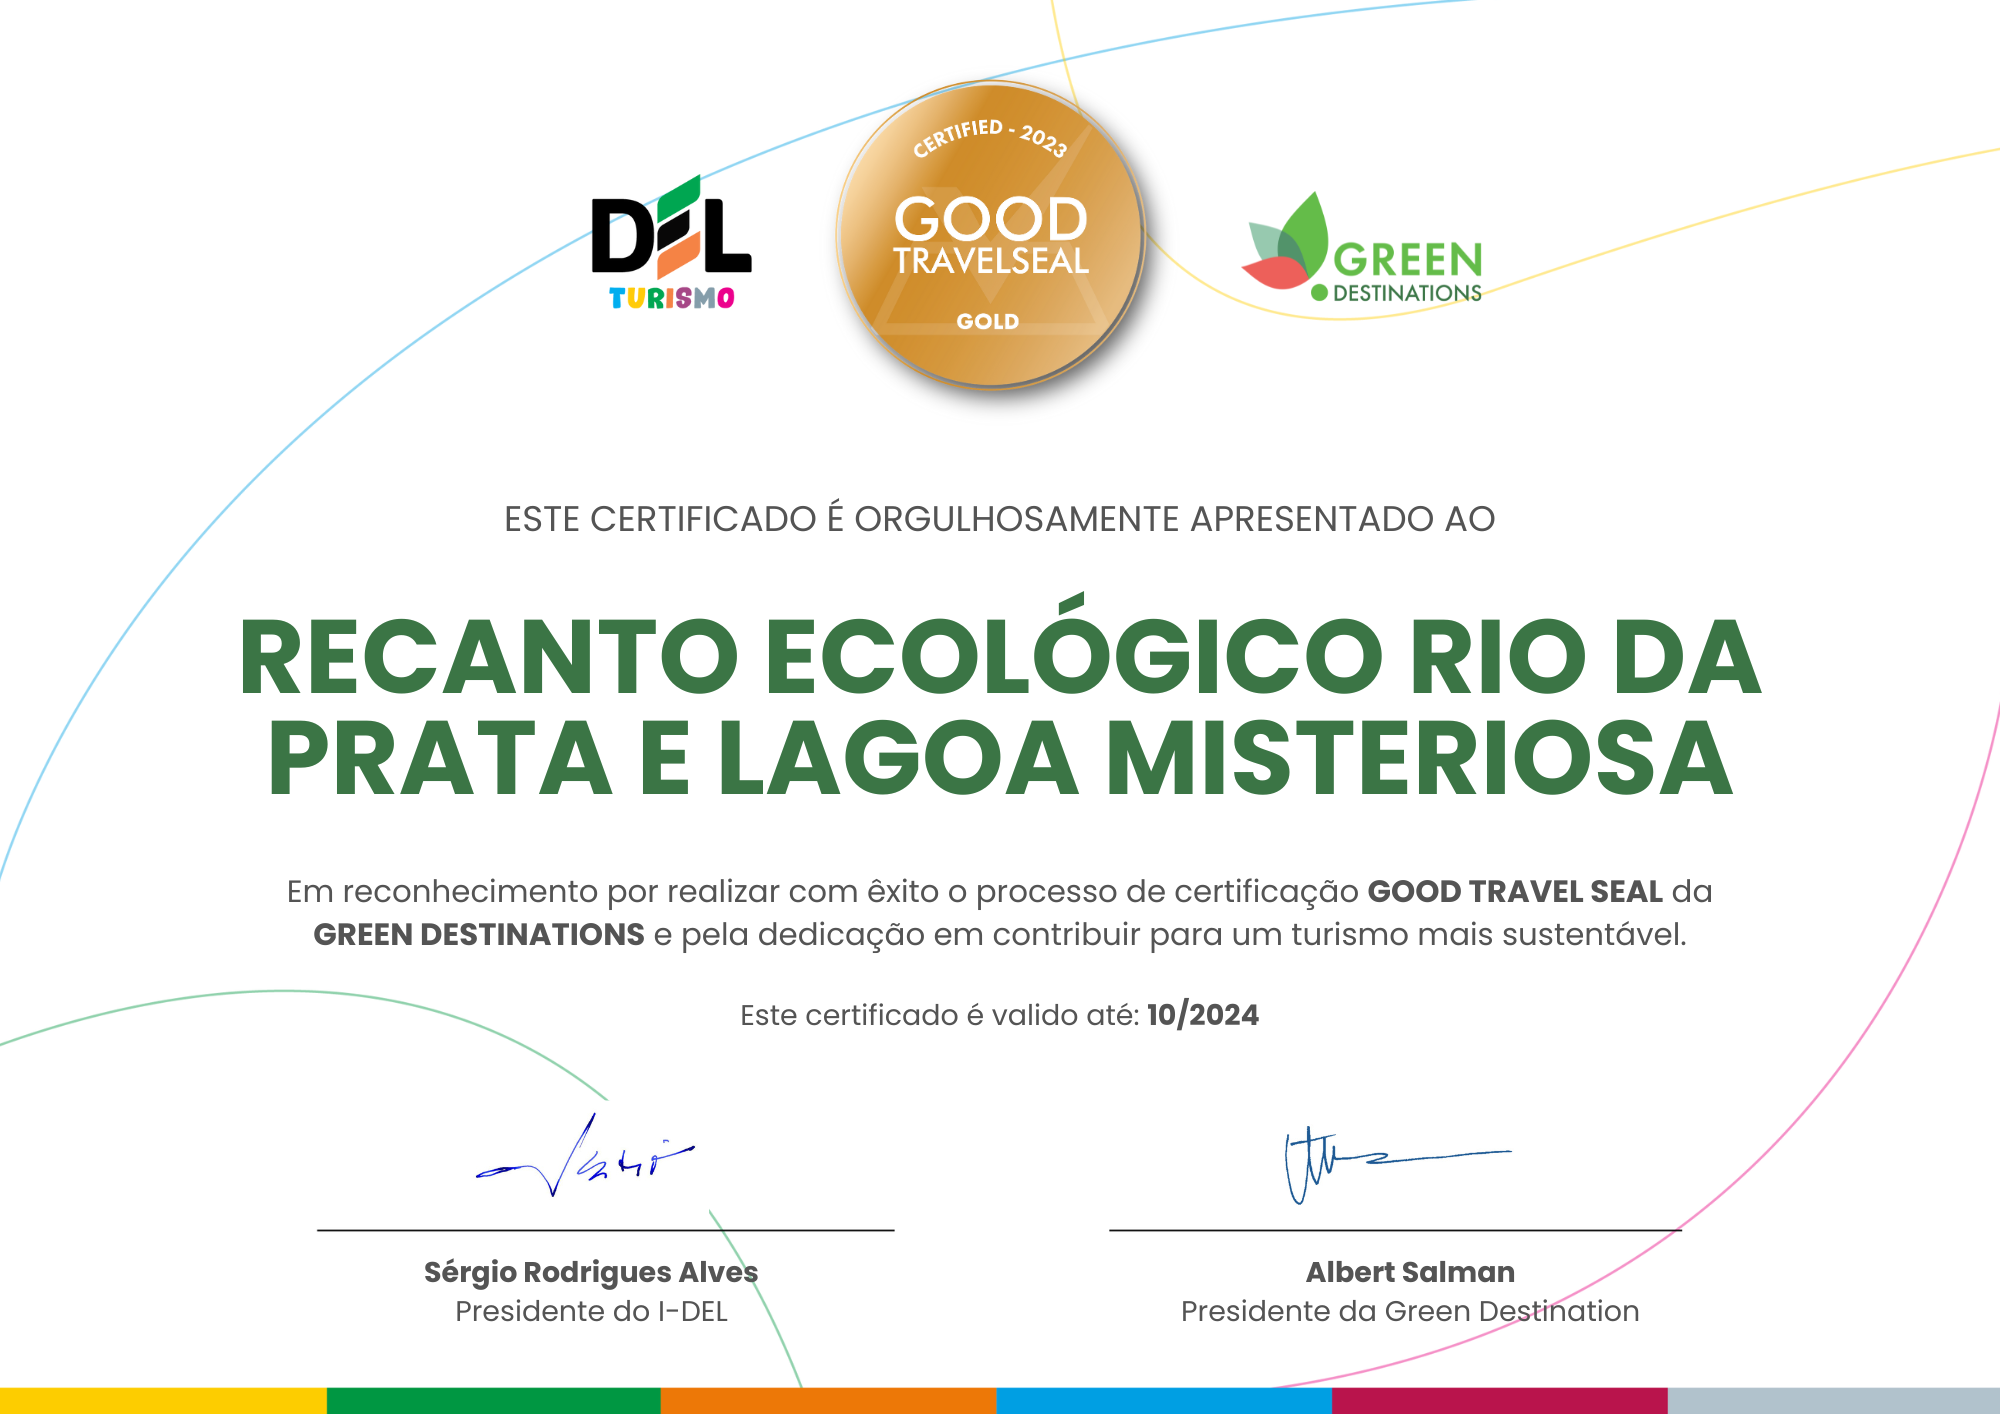 Certificado DEL Turismo - Ouro - Recanto Ecológico Rio da Prata